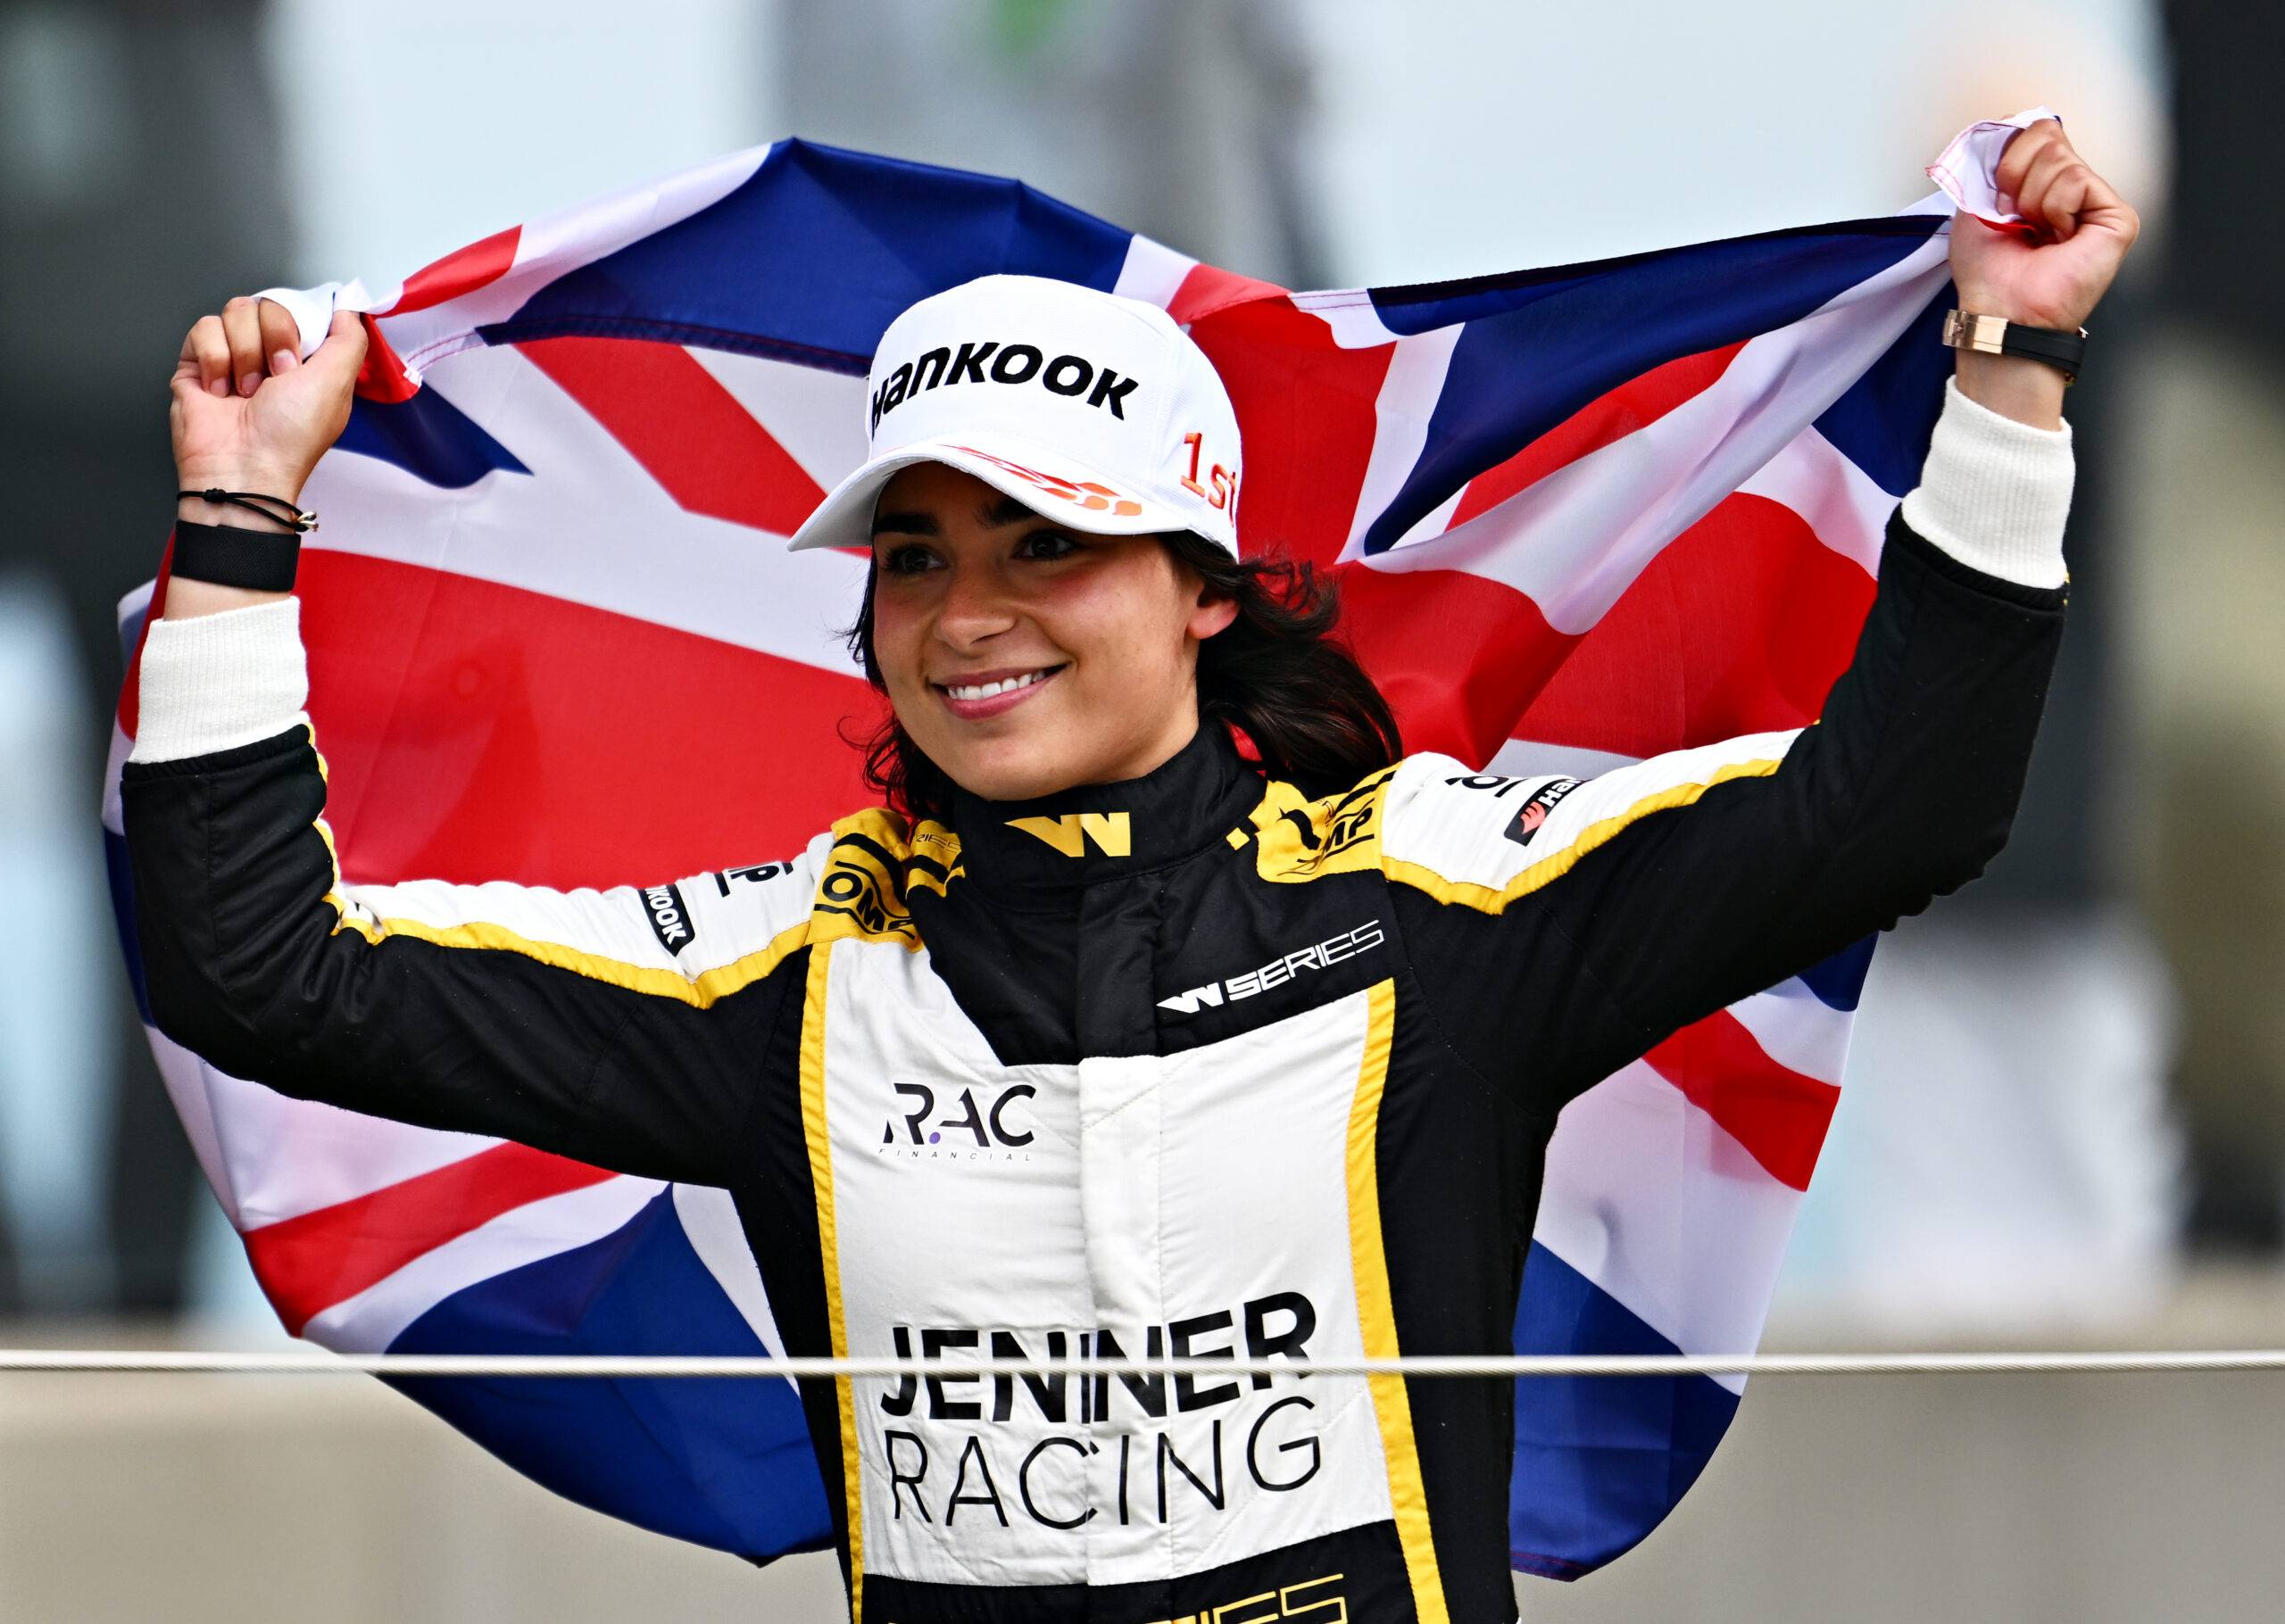 Jamie Chadwick celebrates winning the Silverstone Grand Prix